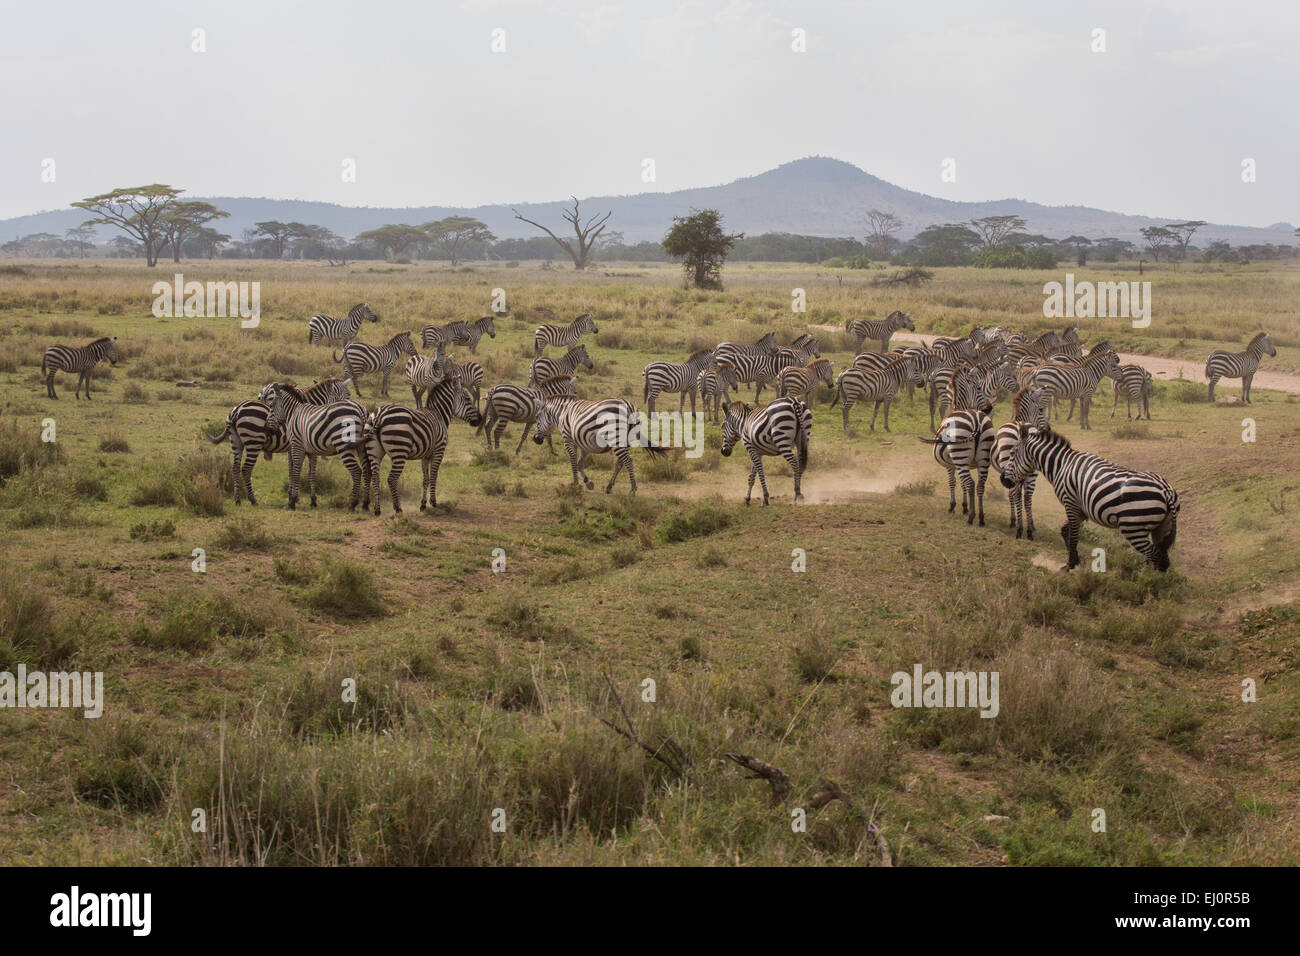 Africa, travel, savanna, Serengeti, mammals, Tanzania, East Africa, animals, wilderness, wild animals, zebra, zebras, equus quagg Stock Photo